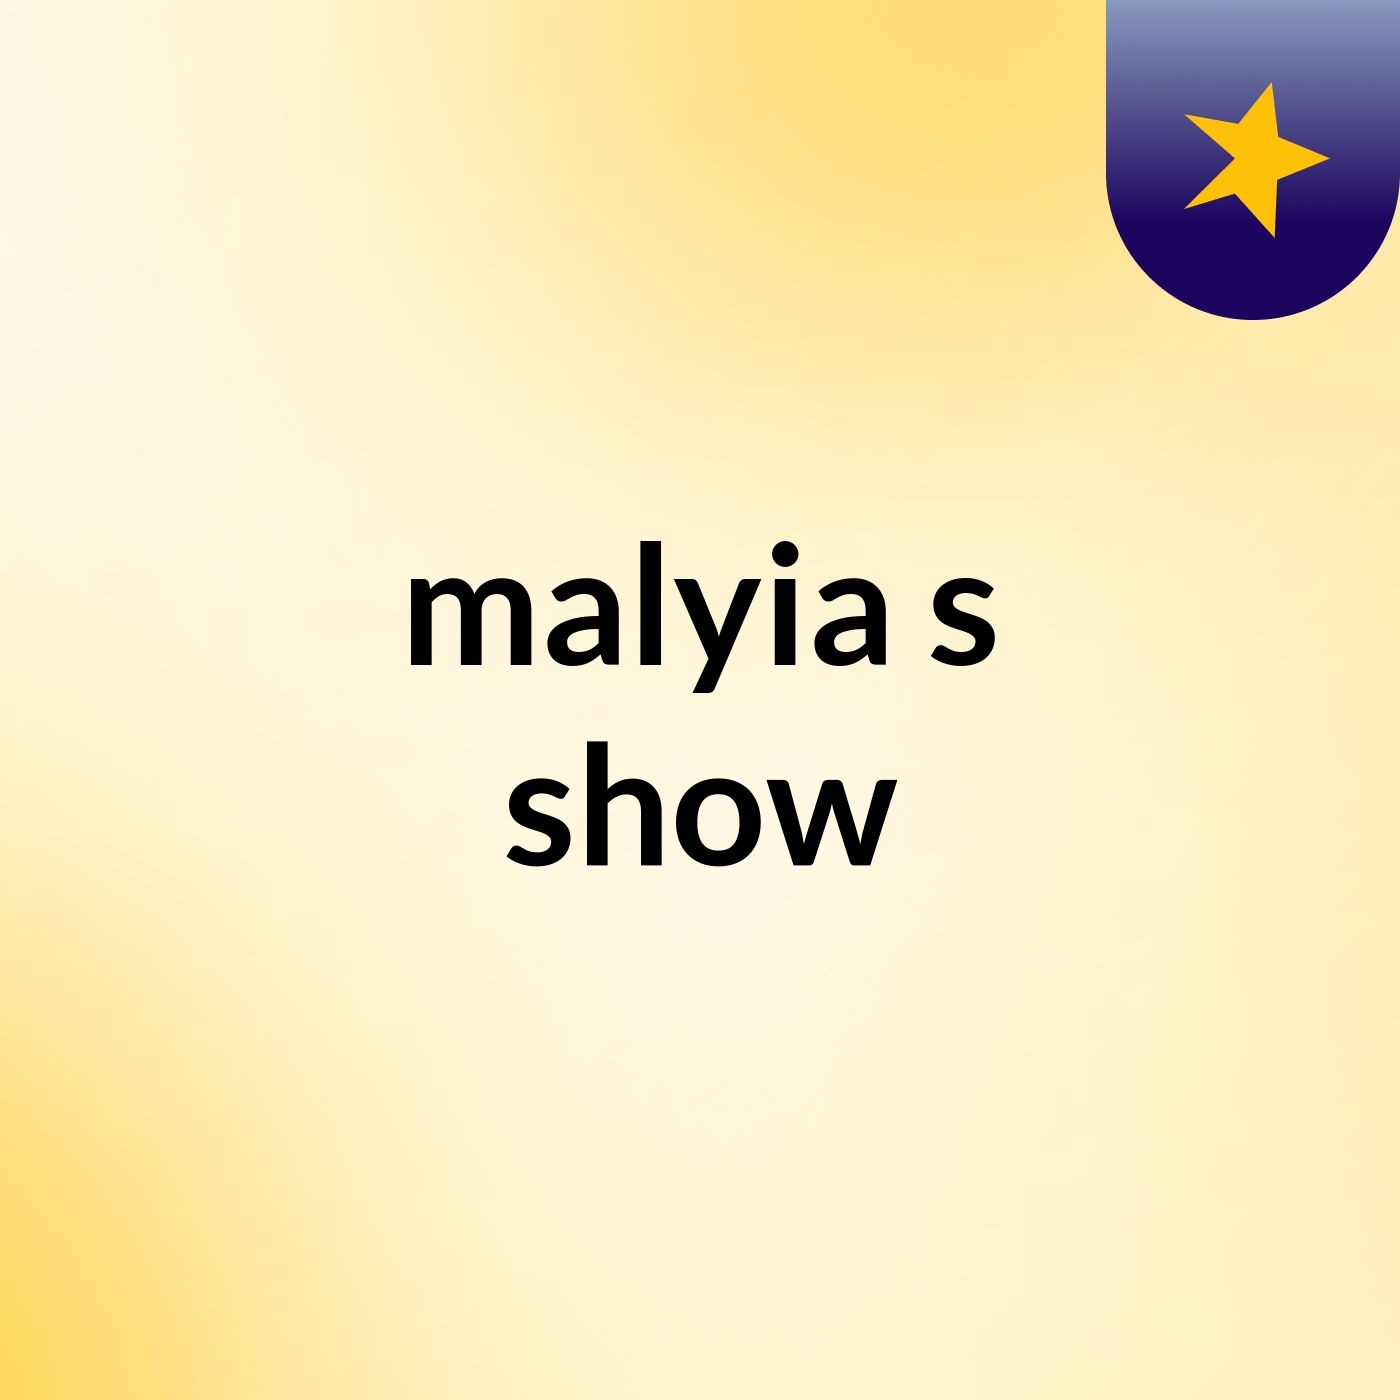 malyia's show